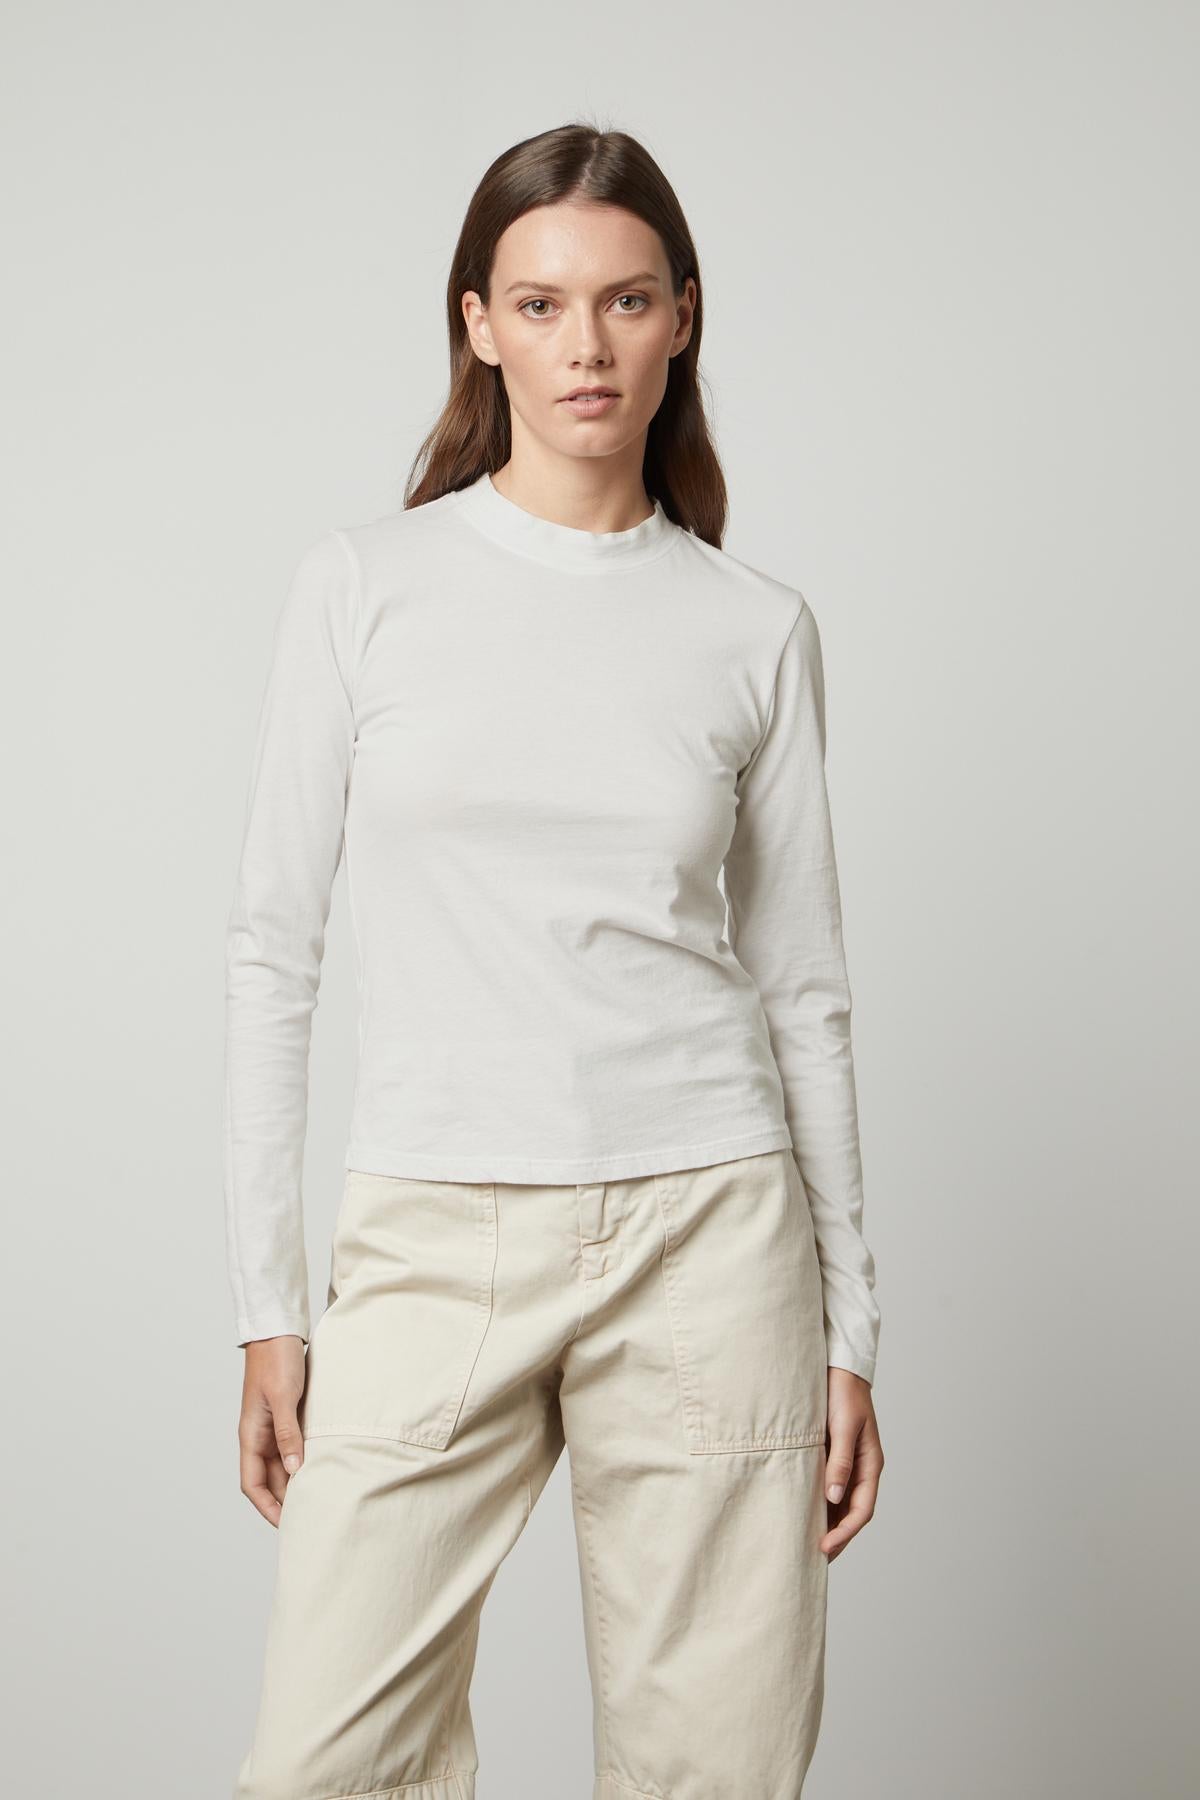   The model is wearing a white LINNY MOCK NECK TEE by Velvet by Graham & Spencer. 